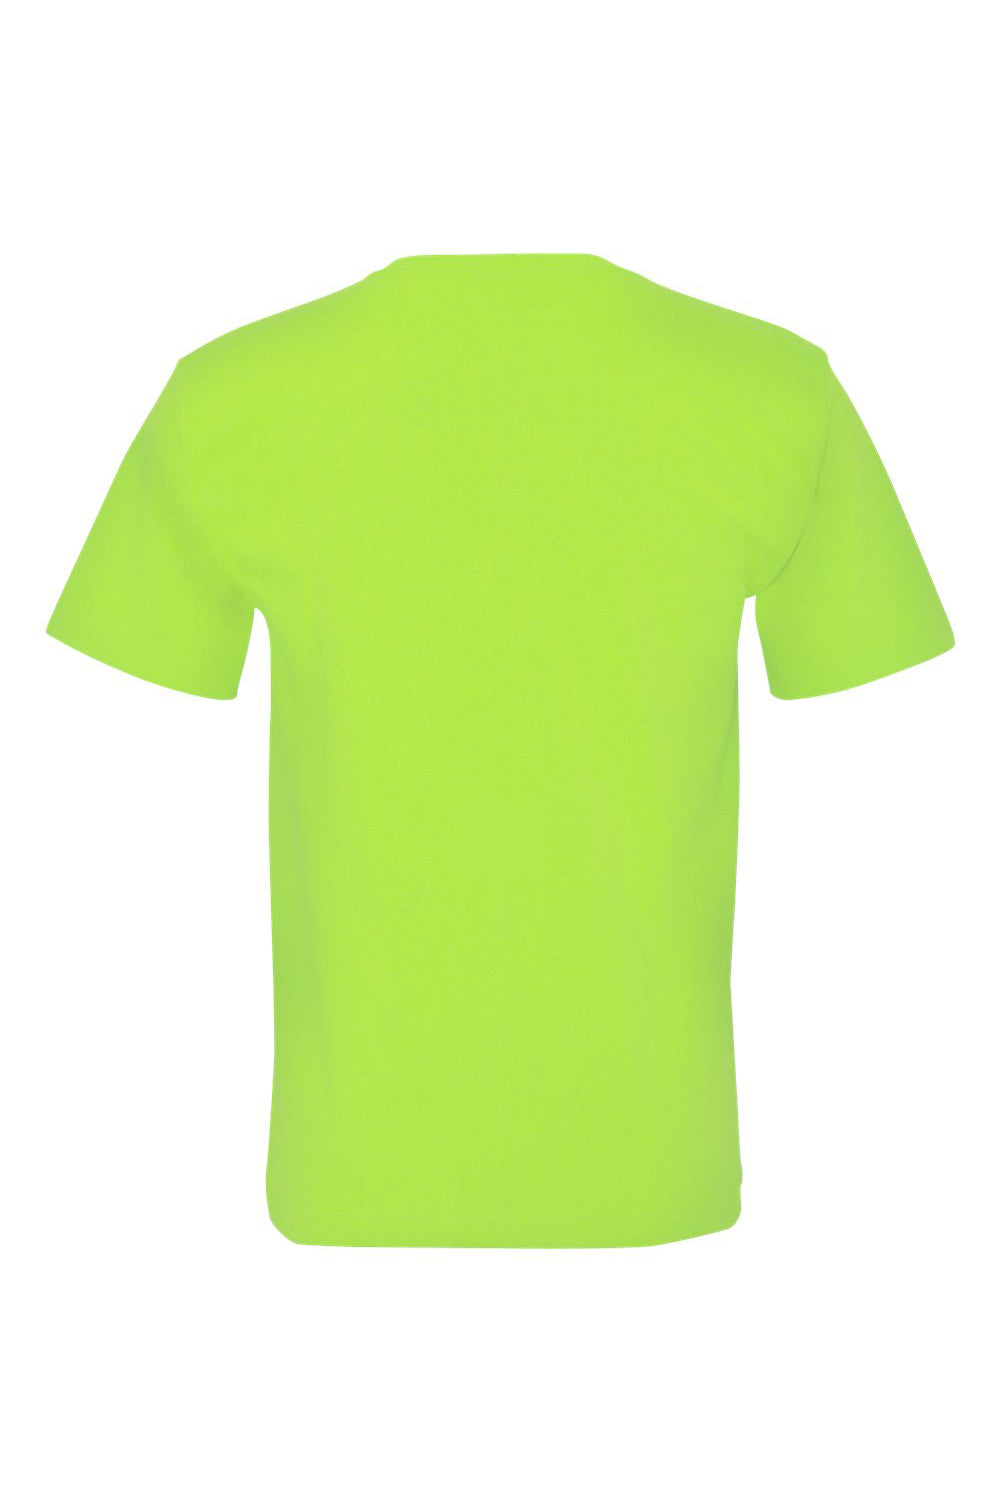 Bayside BA5070 Mens USA Made Short Sleeve Crewneck T-Shirt w/ Pocket Lime Green Flat Back